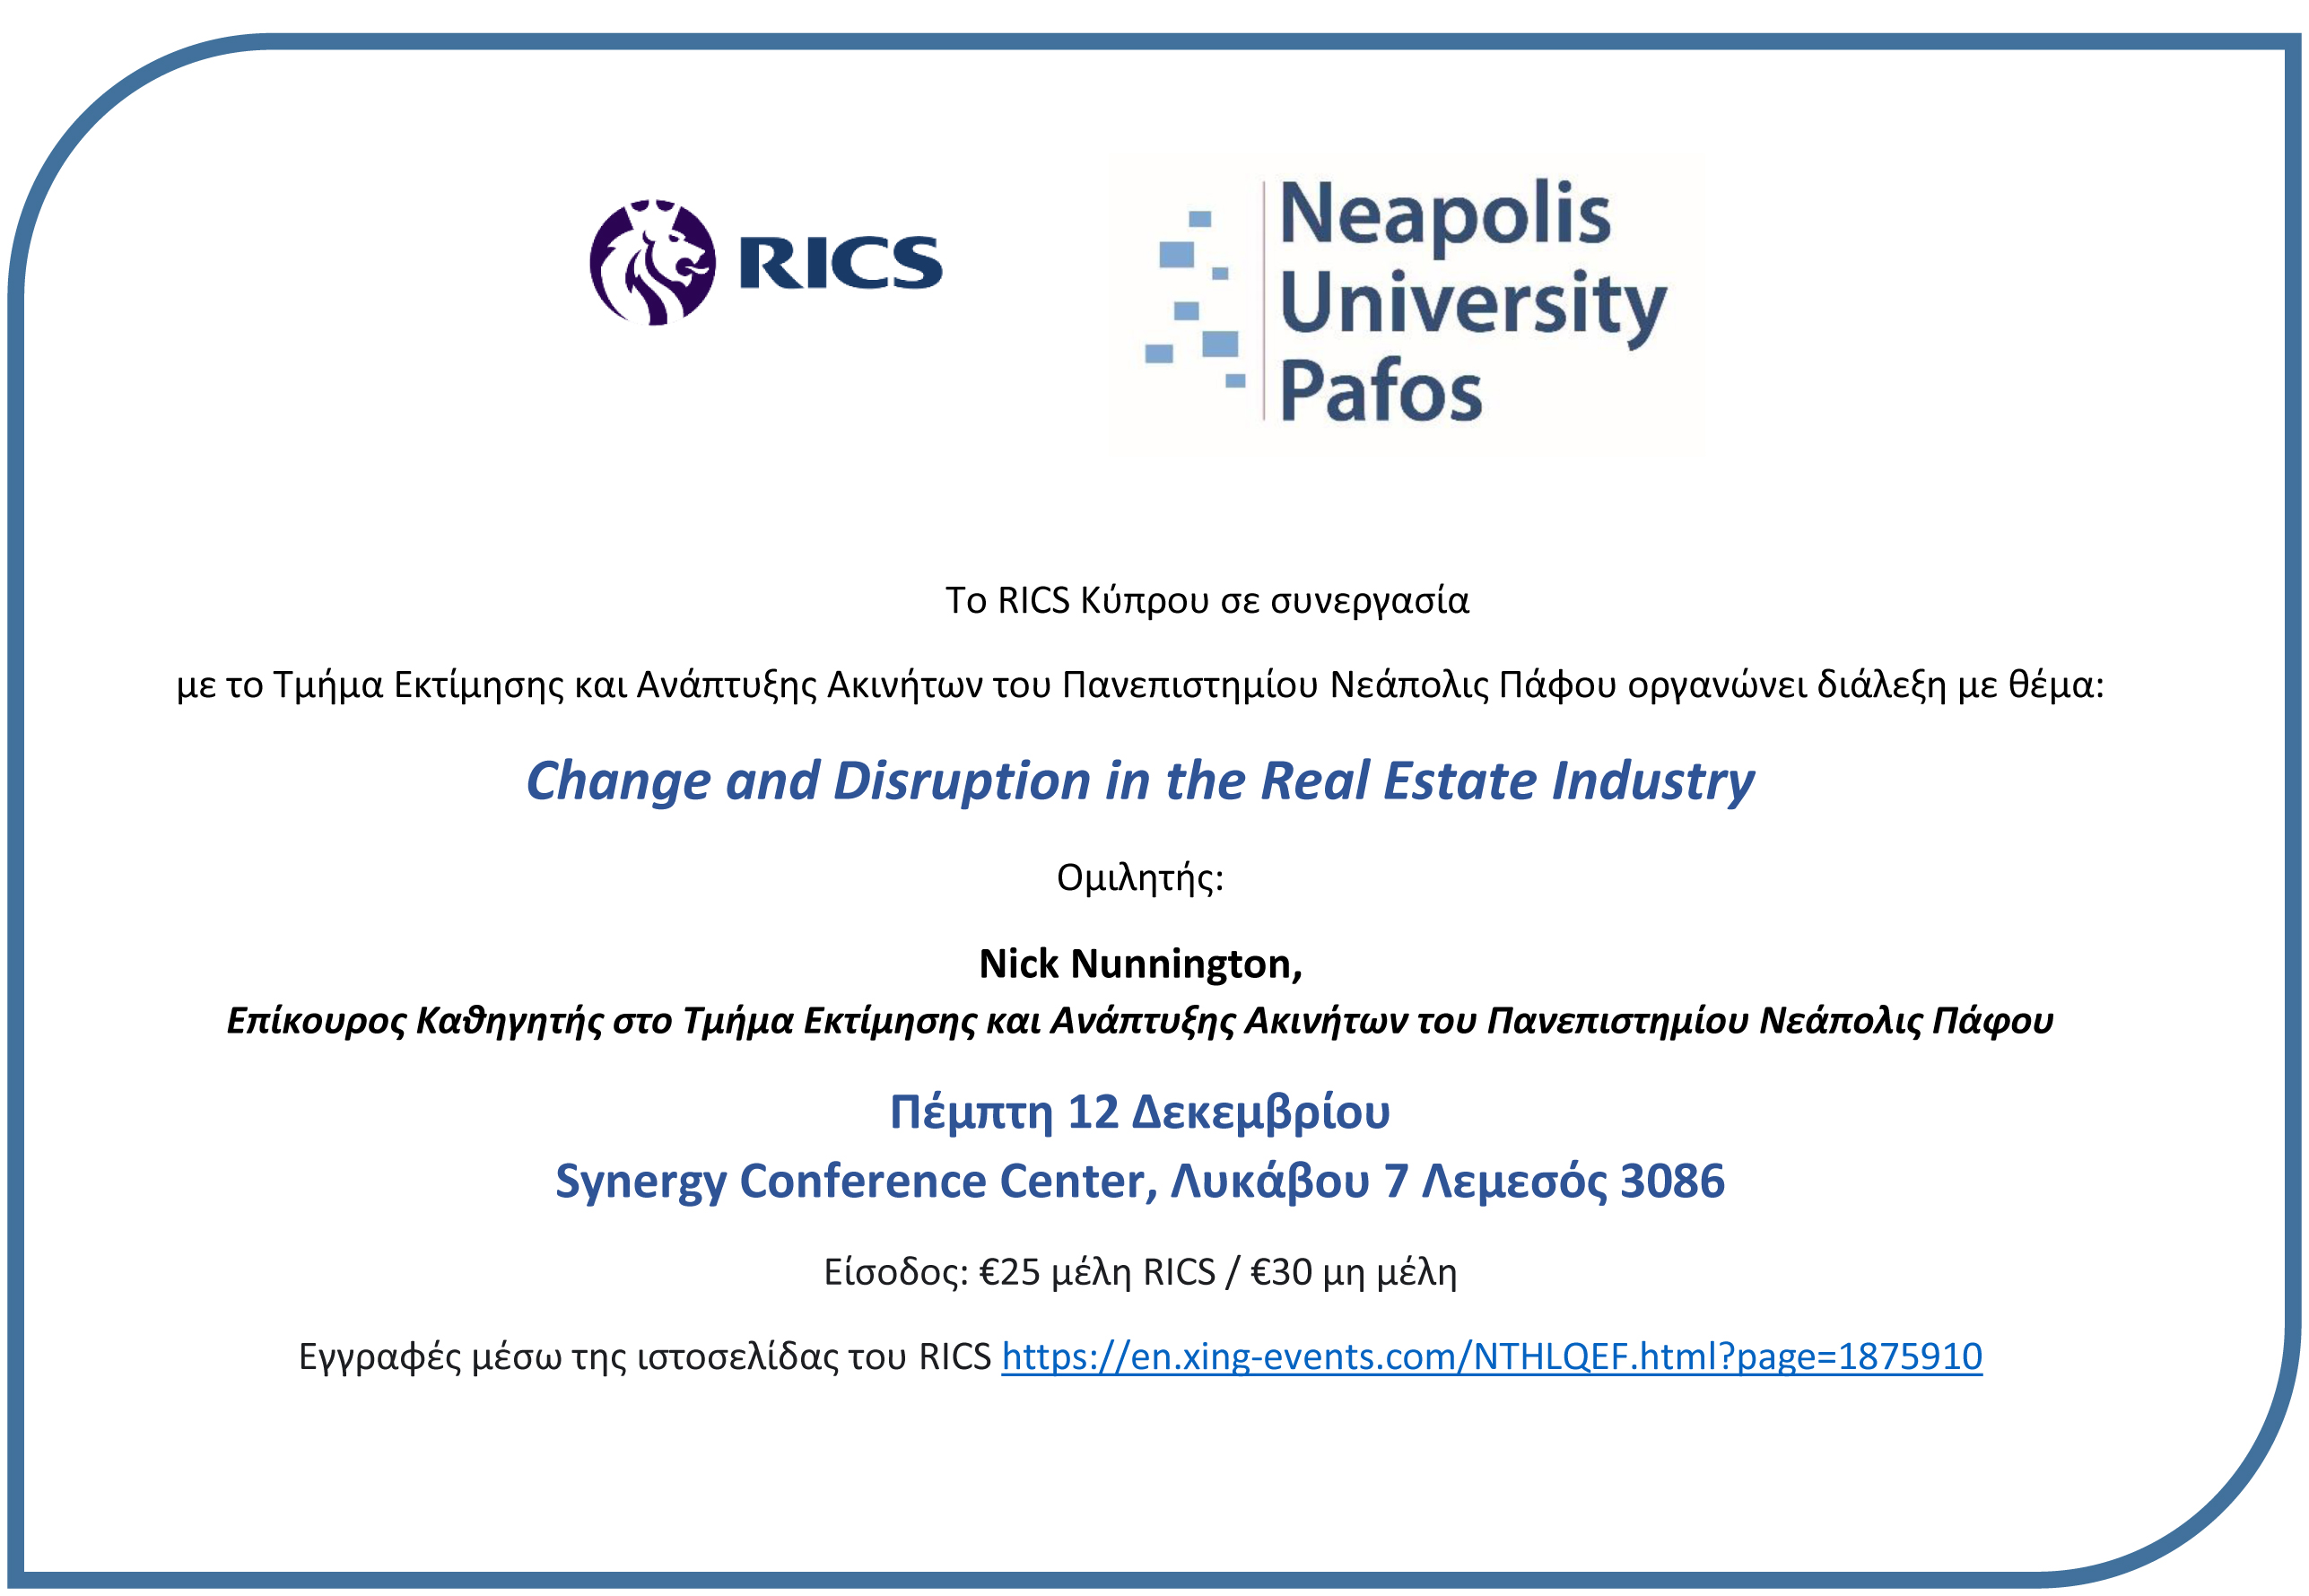 RICS Κύπρου & Πανεπιστήμιο Νεάπολις οργανώνουν τη διάλεξη: 